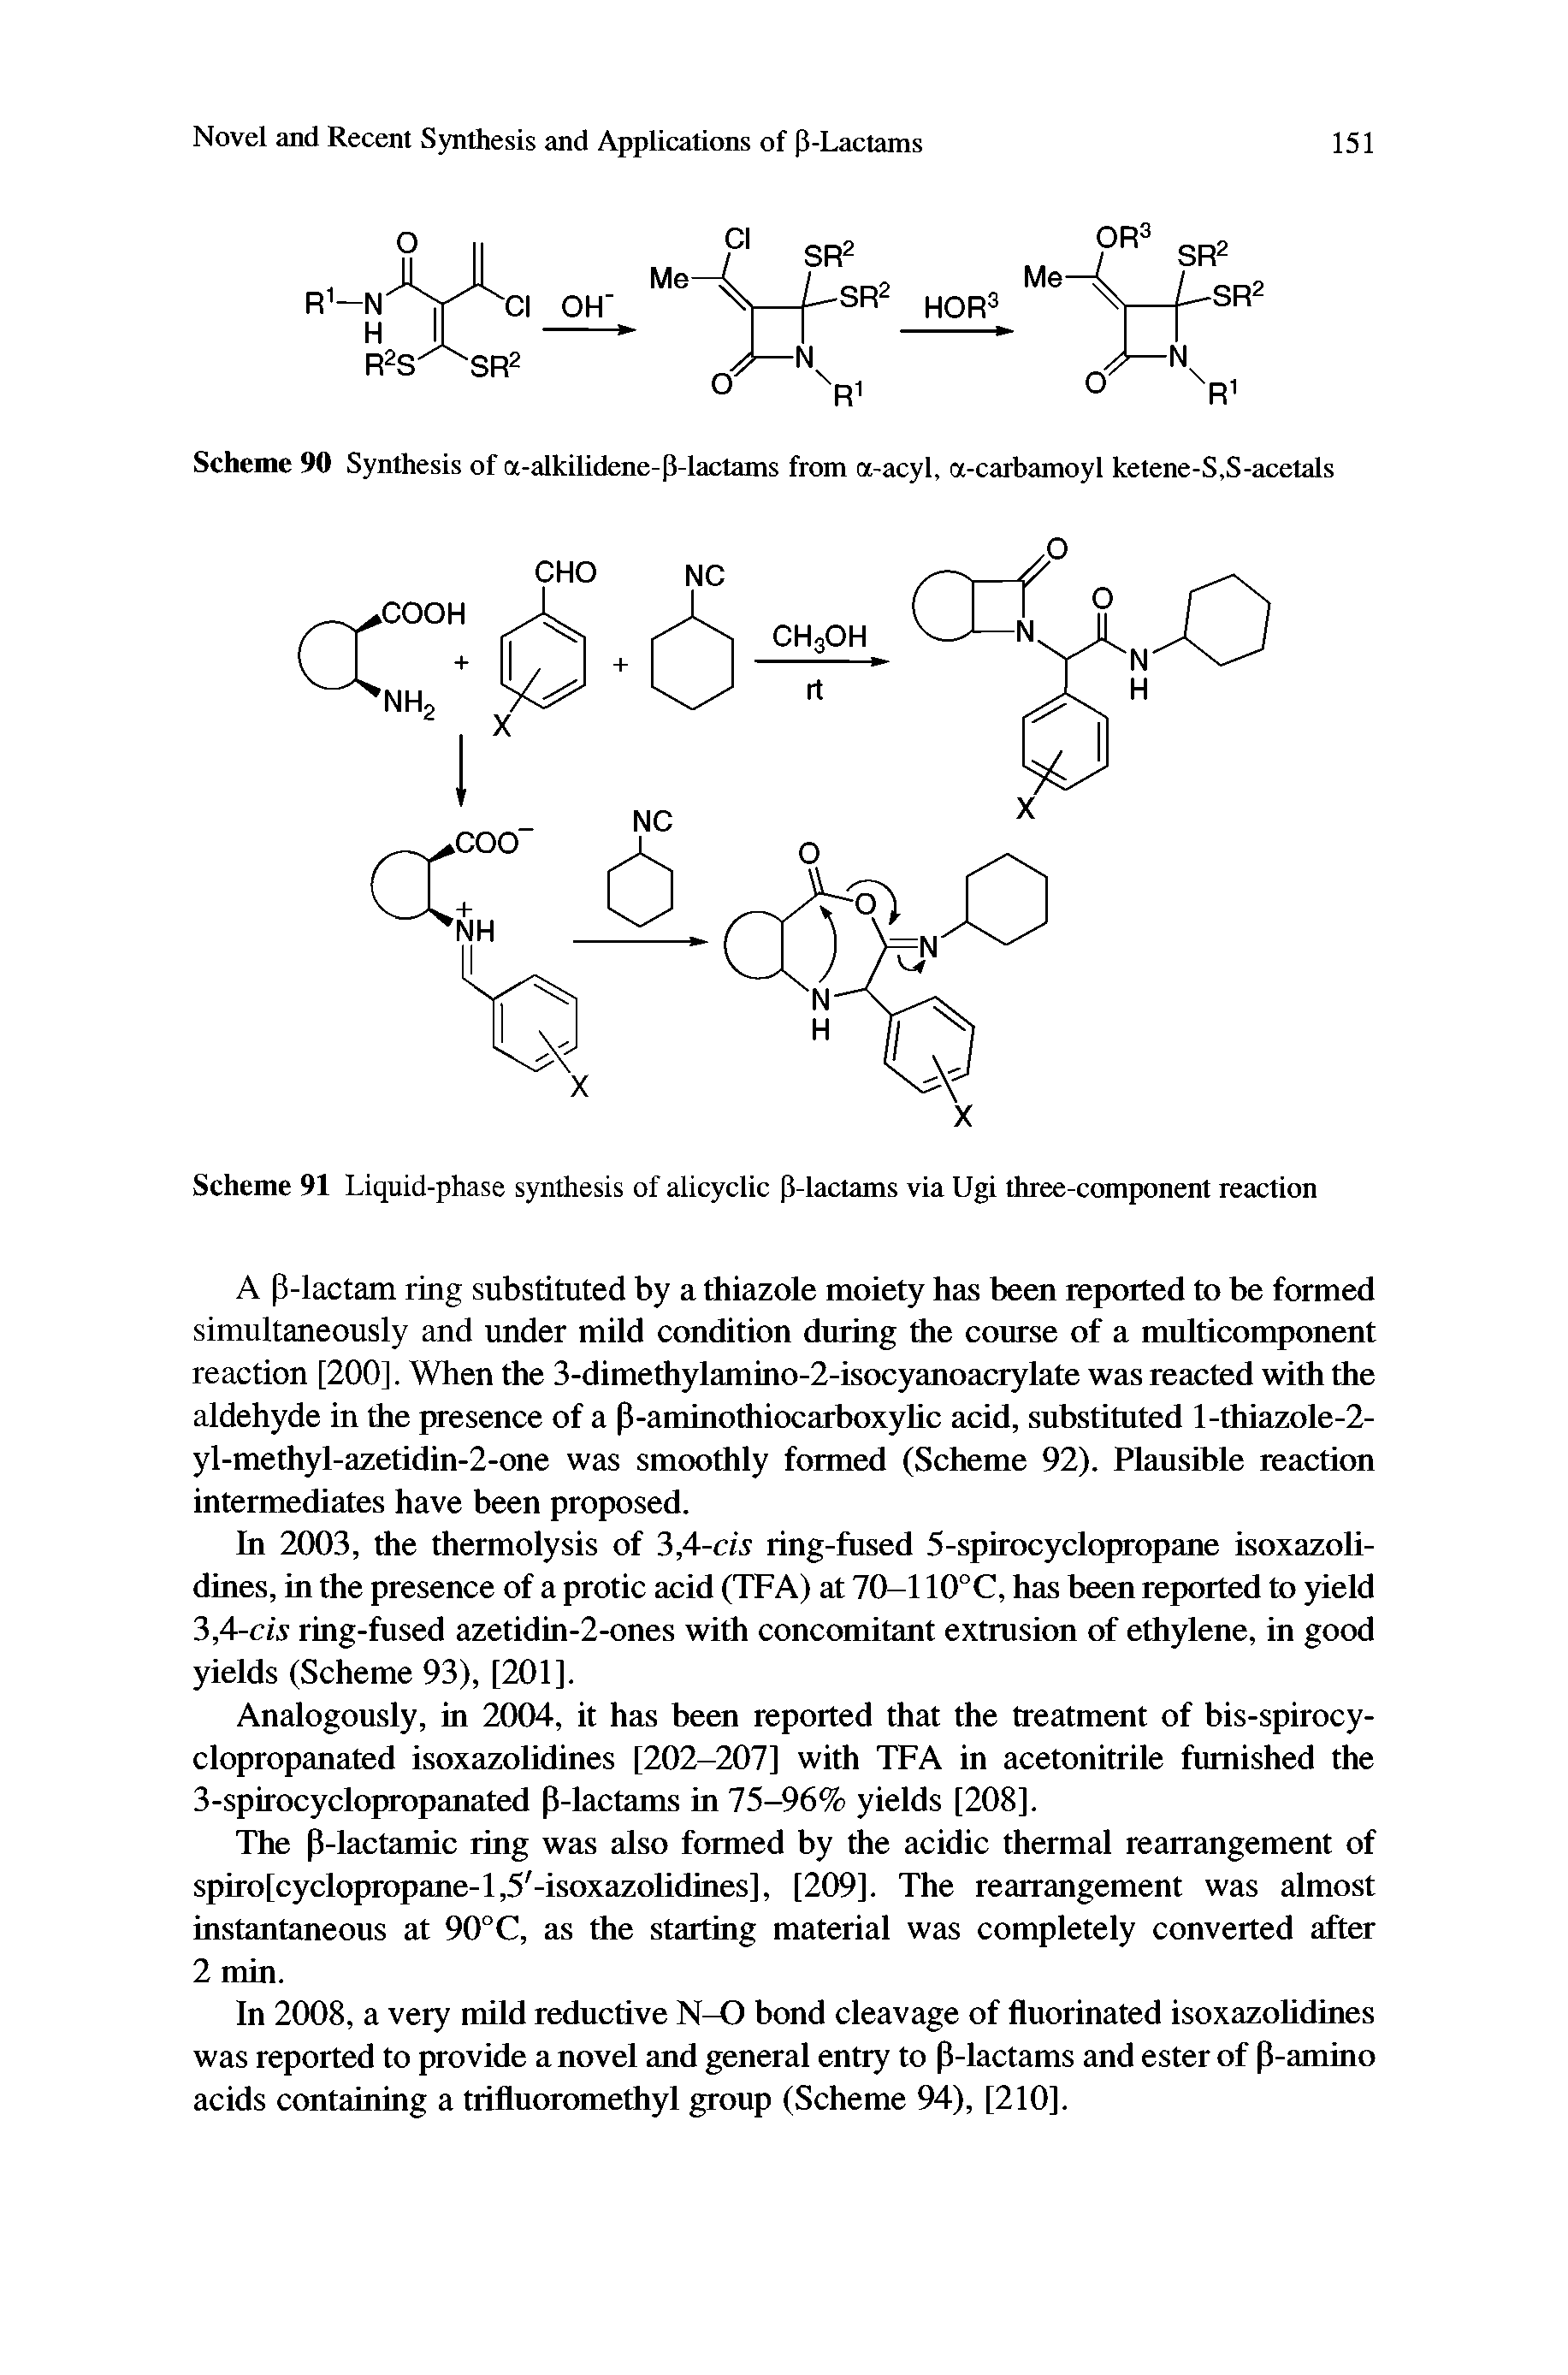 Scheme 91 Liquid-phase synthesis of alicyclic P-lactams via Ugi three-component reaction...